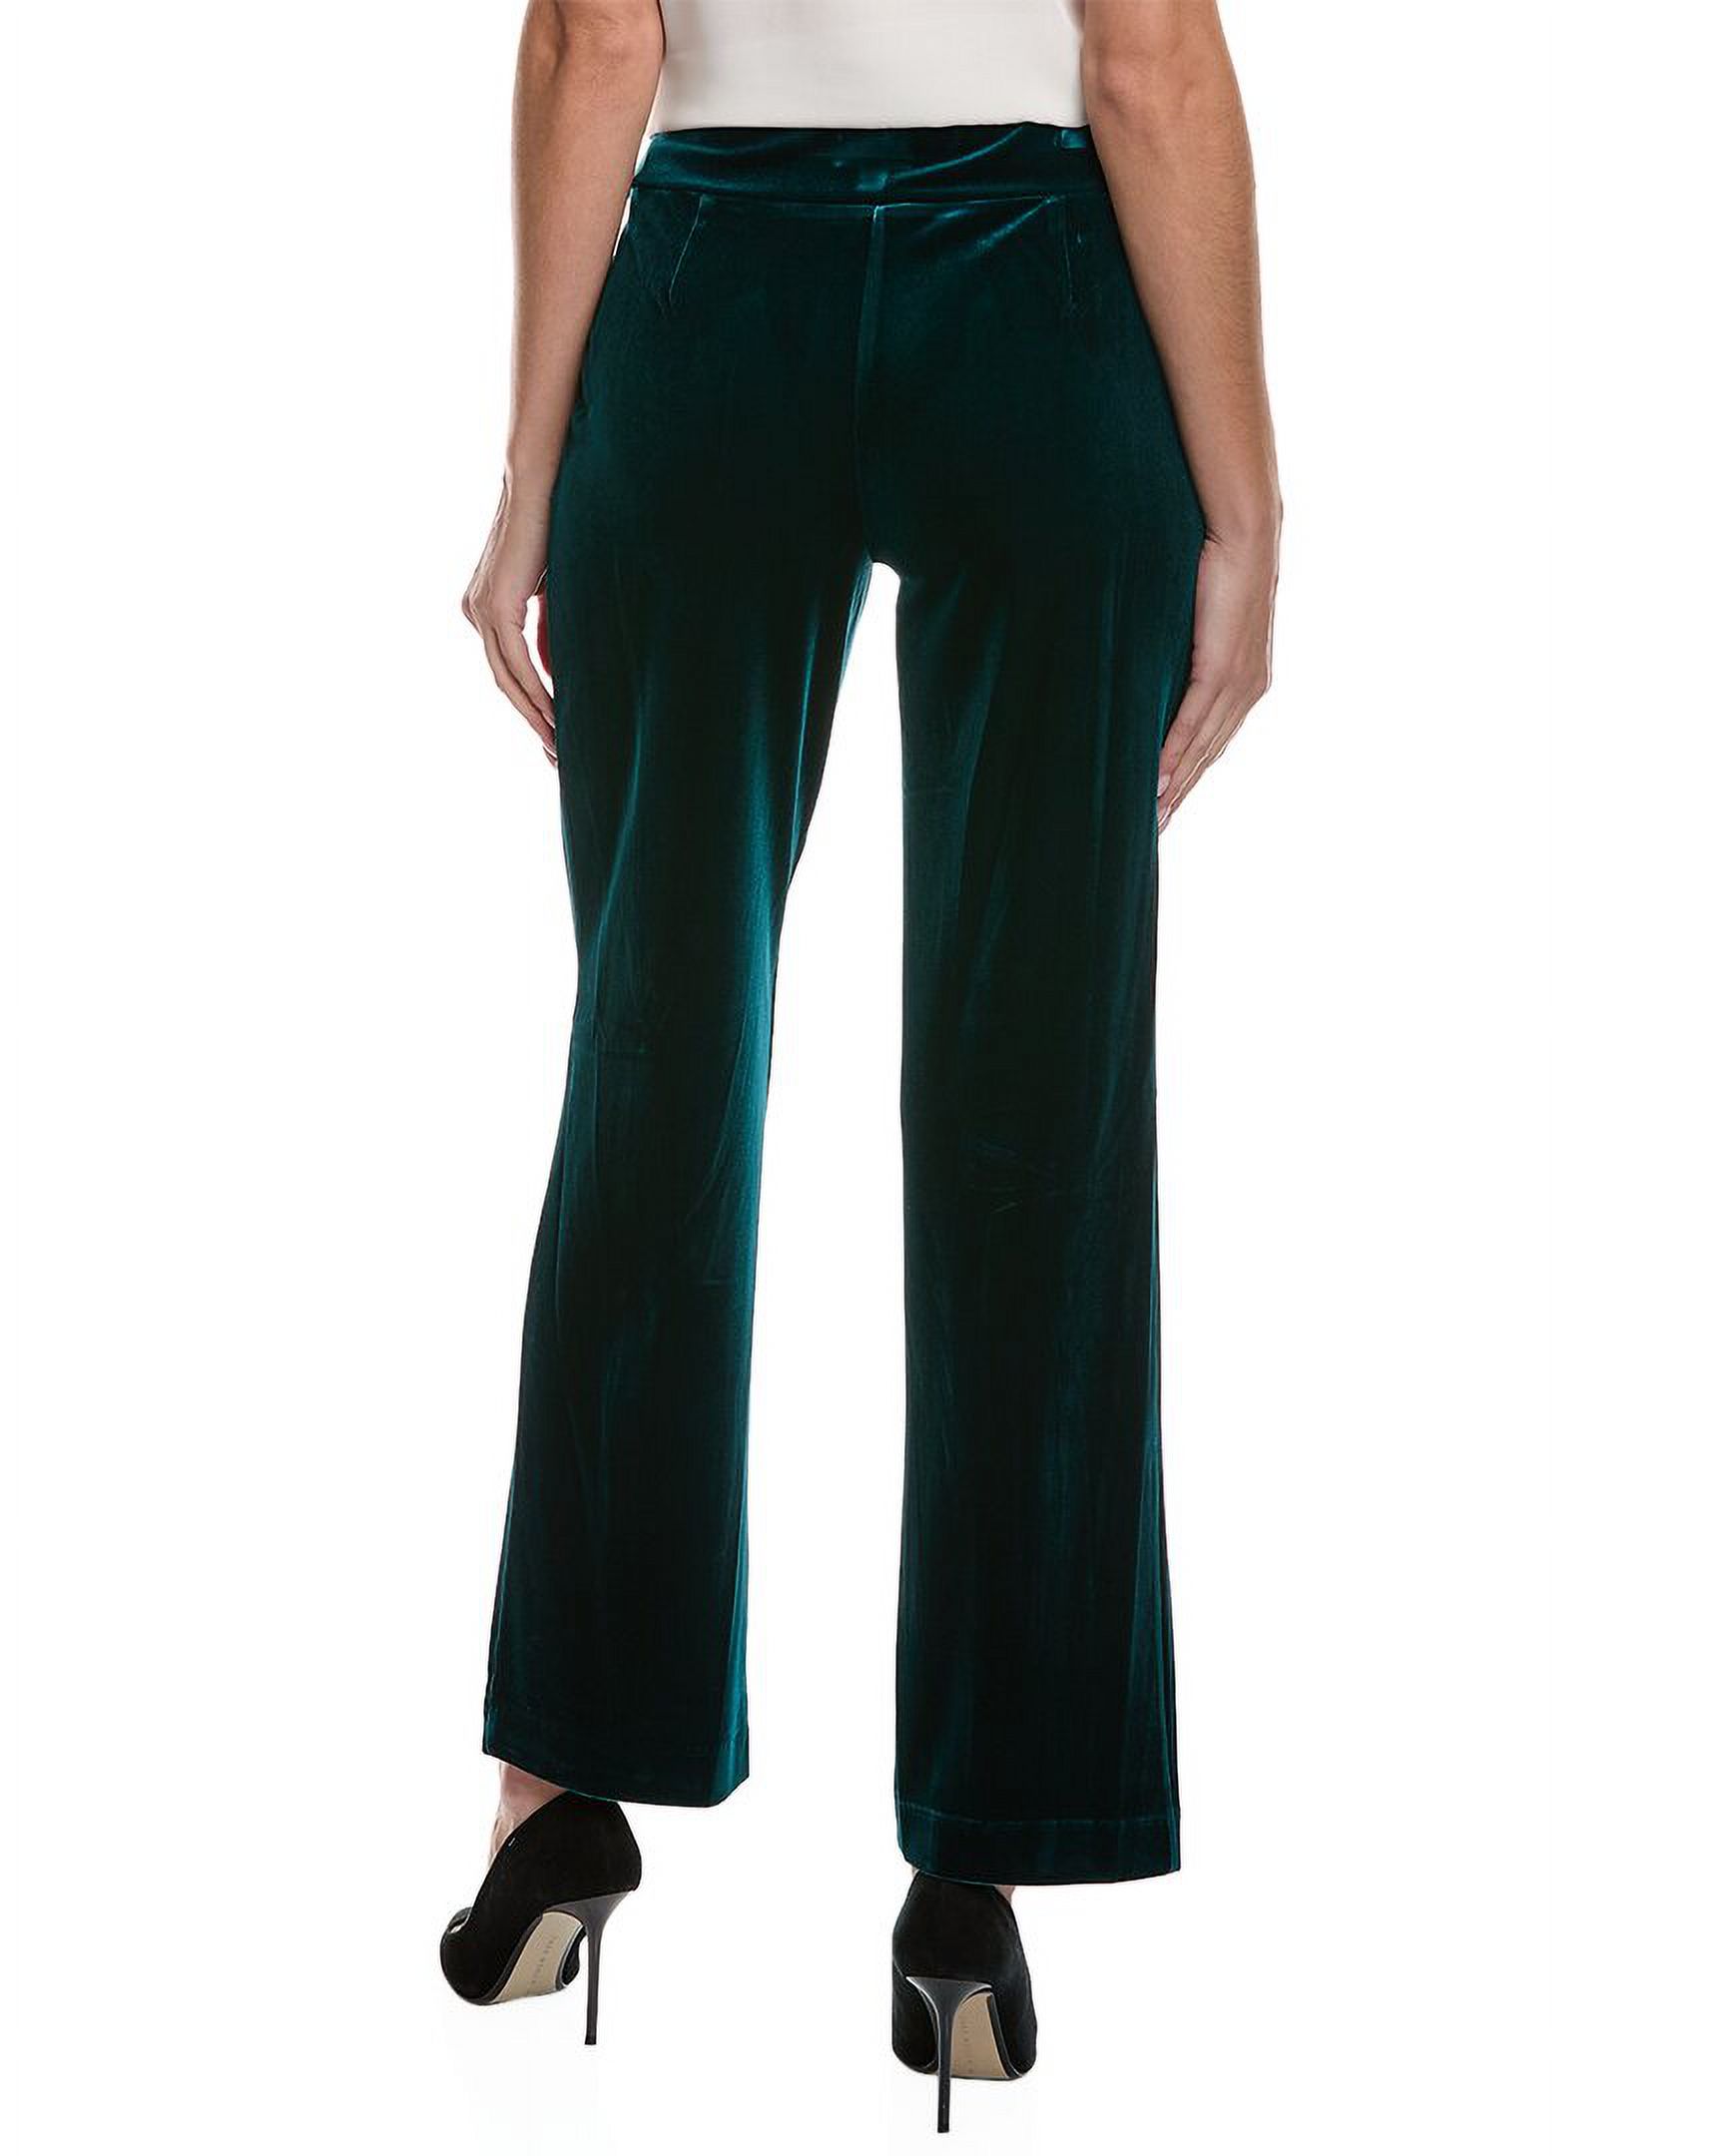 Jones New York womens Velour Pant, XL, Green - Walmart.com